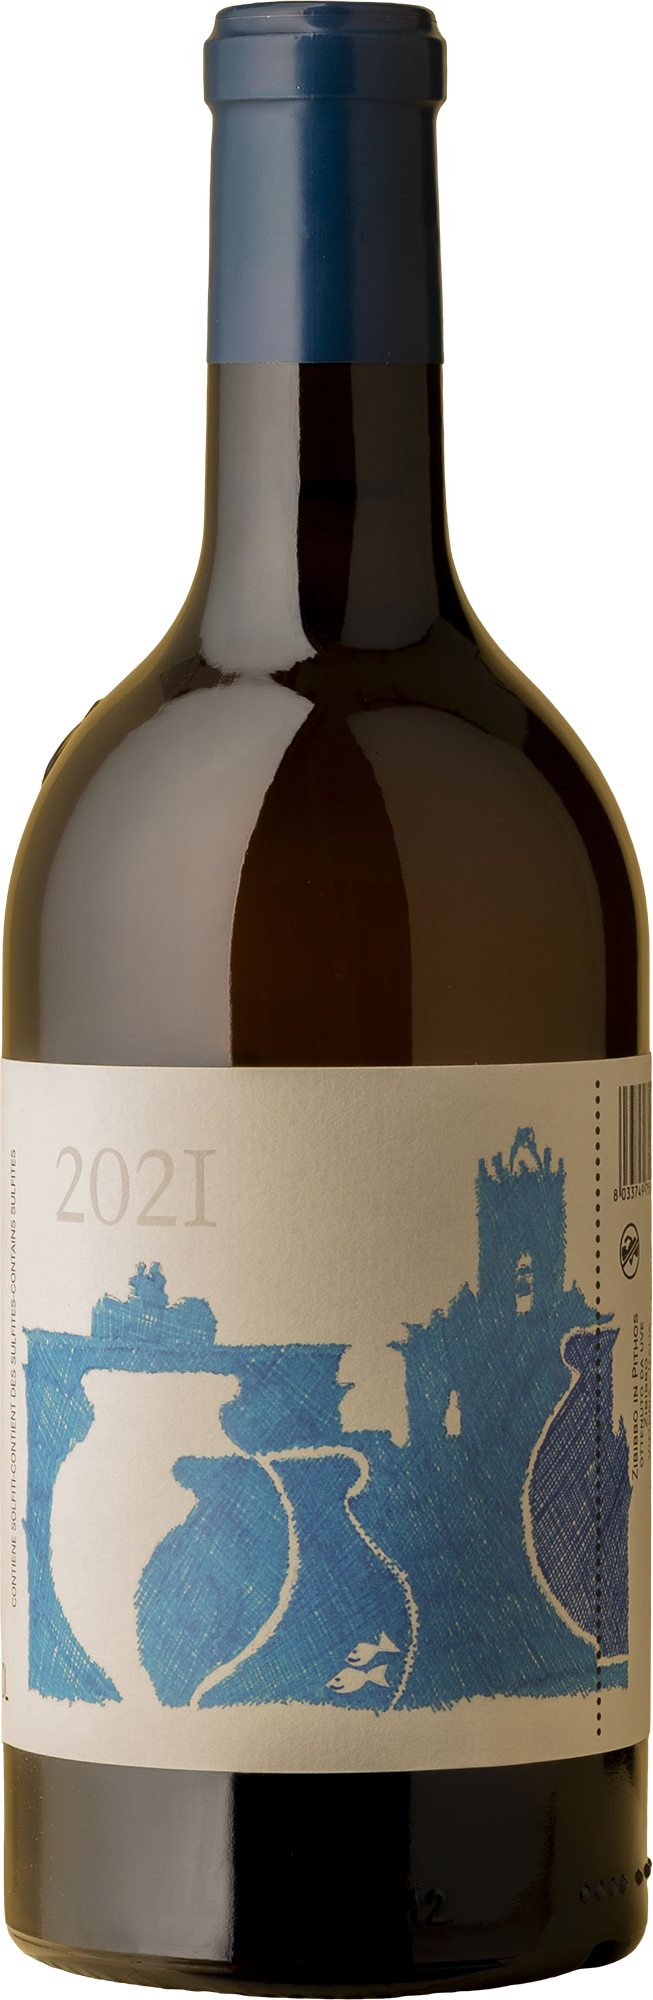 COS - Zibbibo in Pithos 2021 Orange Wine